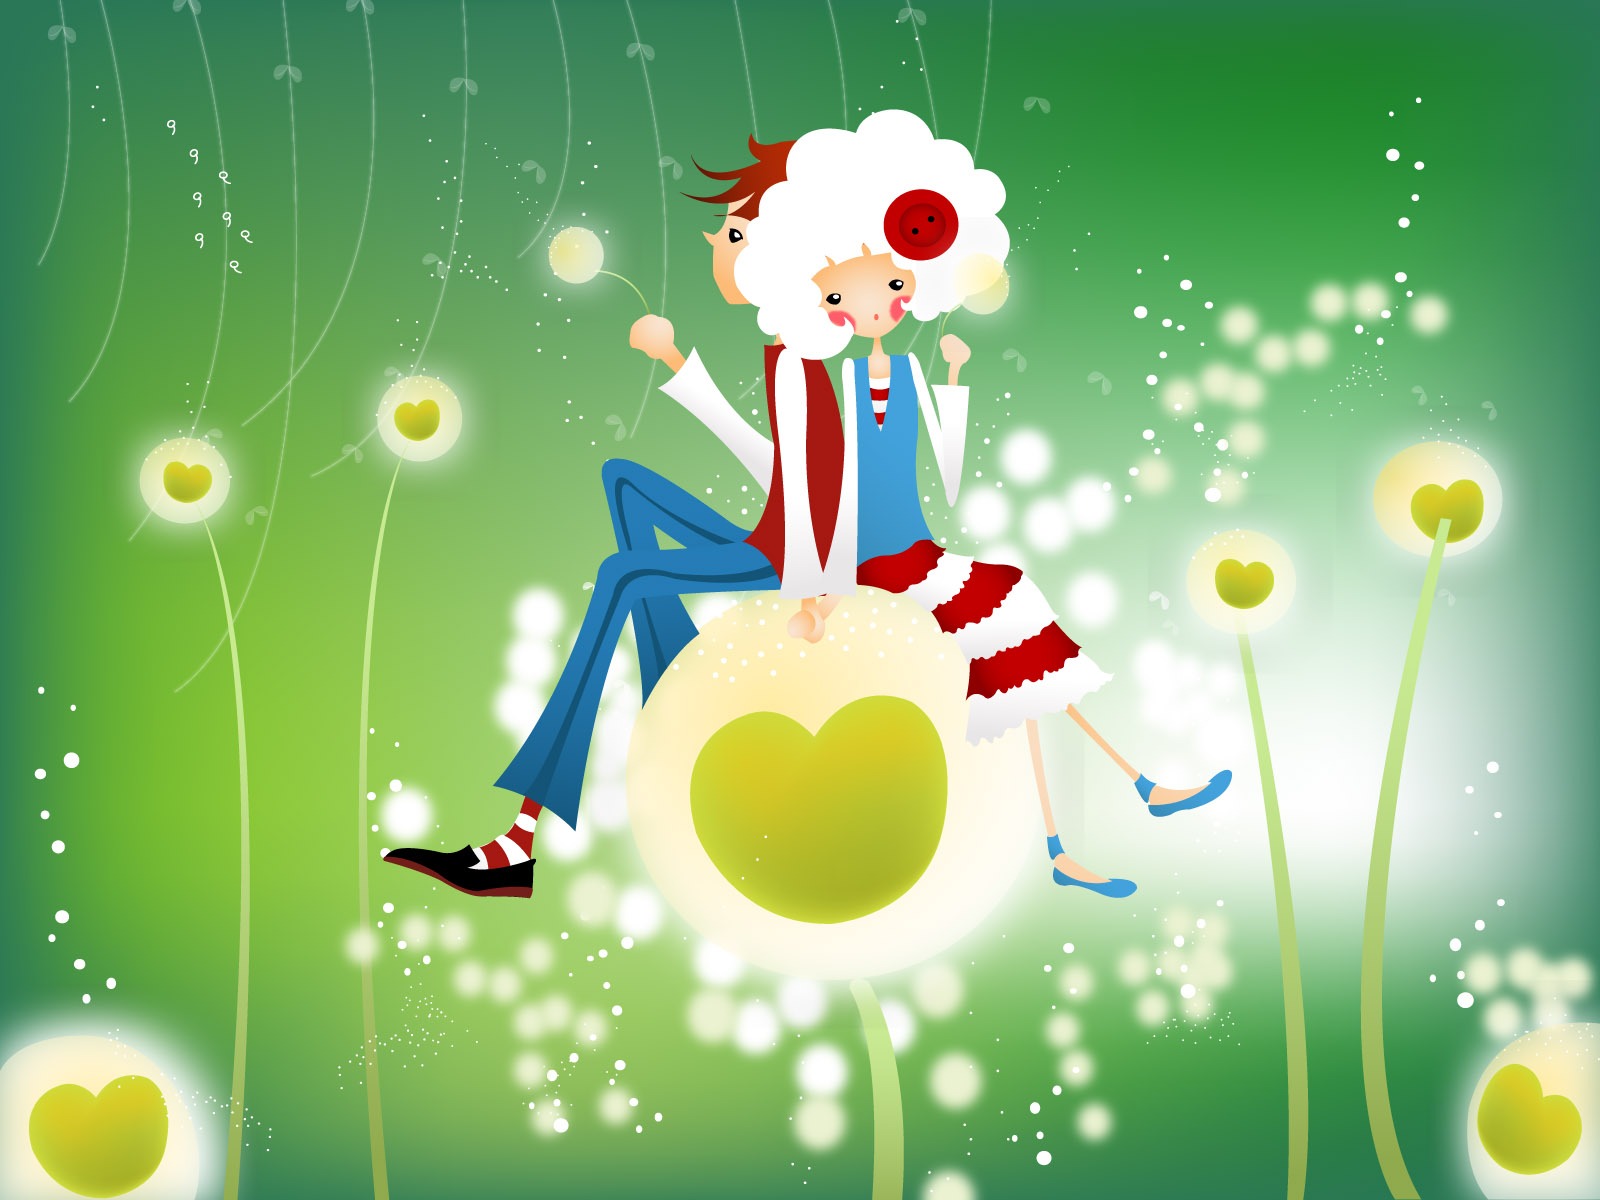 Button girl wallpaper illustrator #1 - 1600x1200